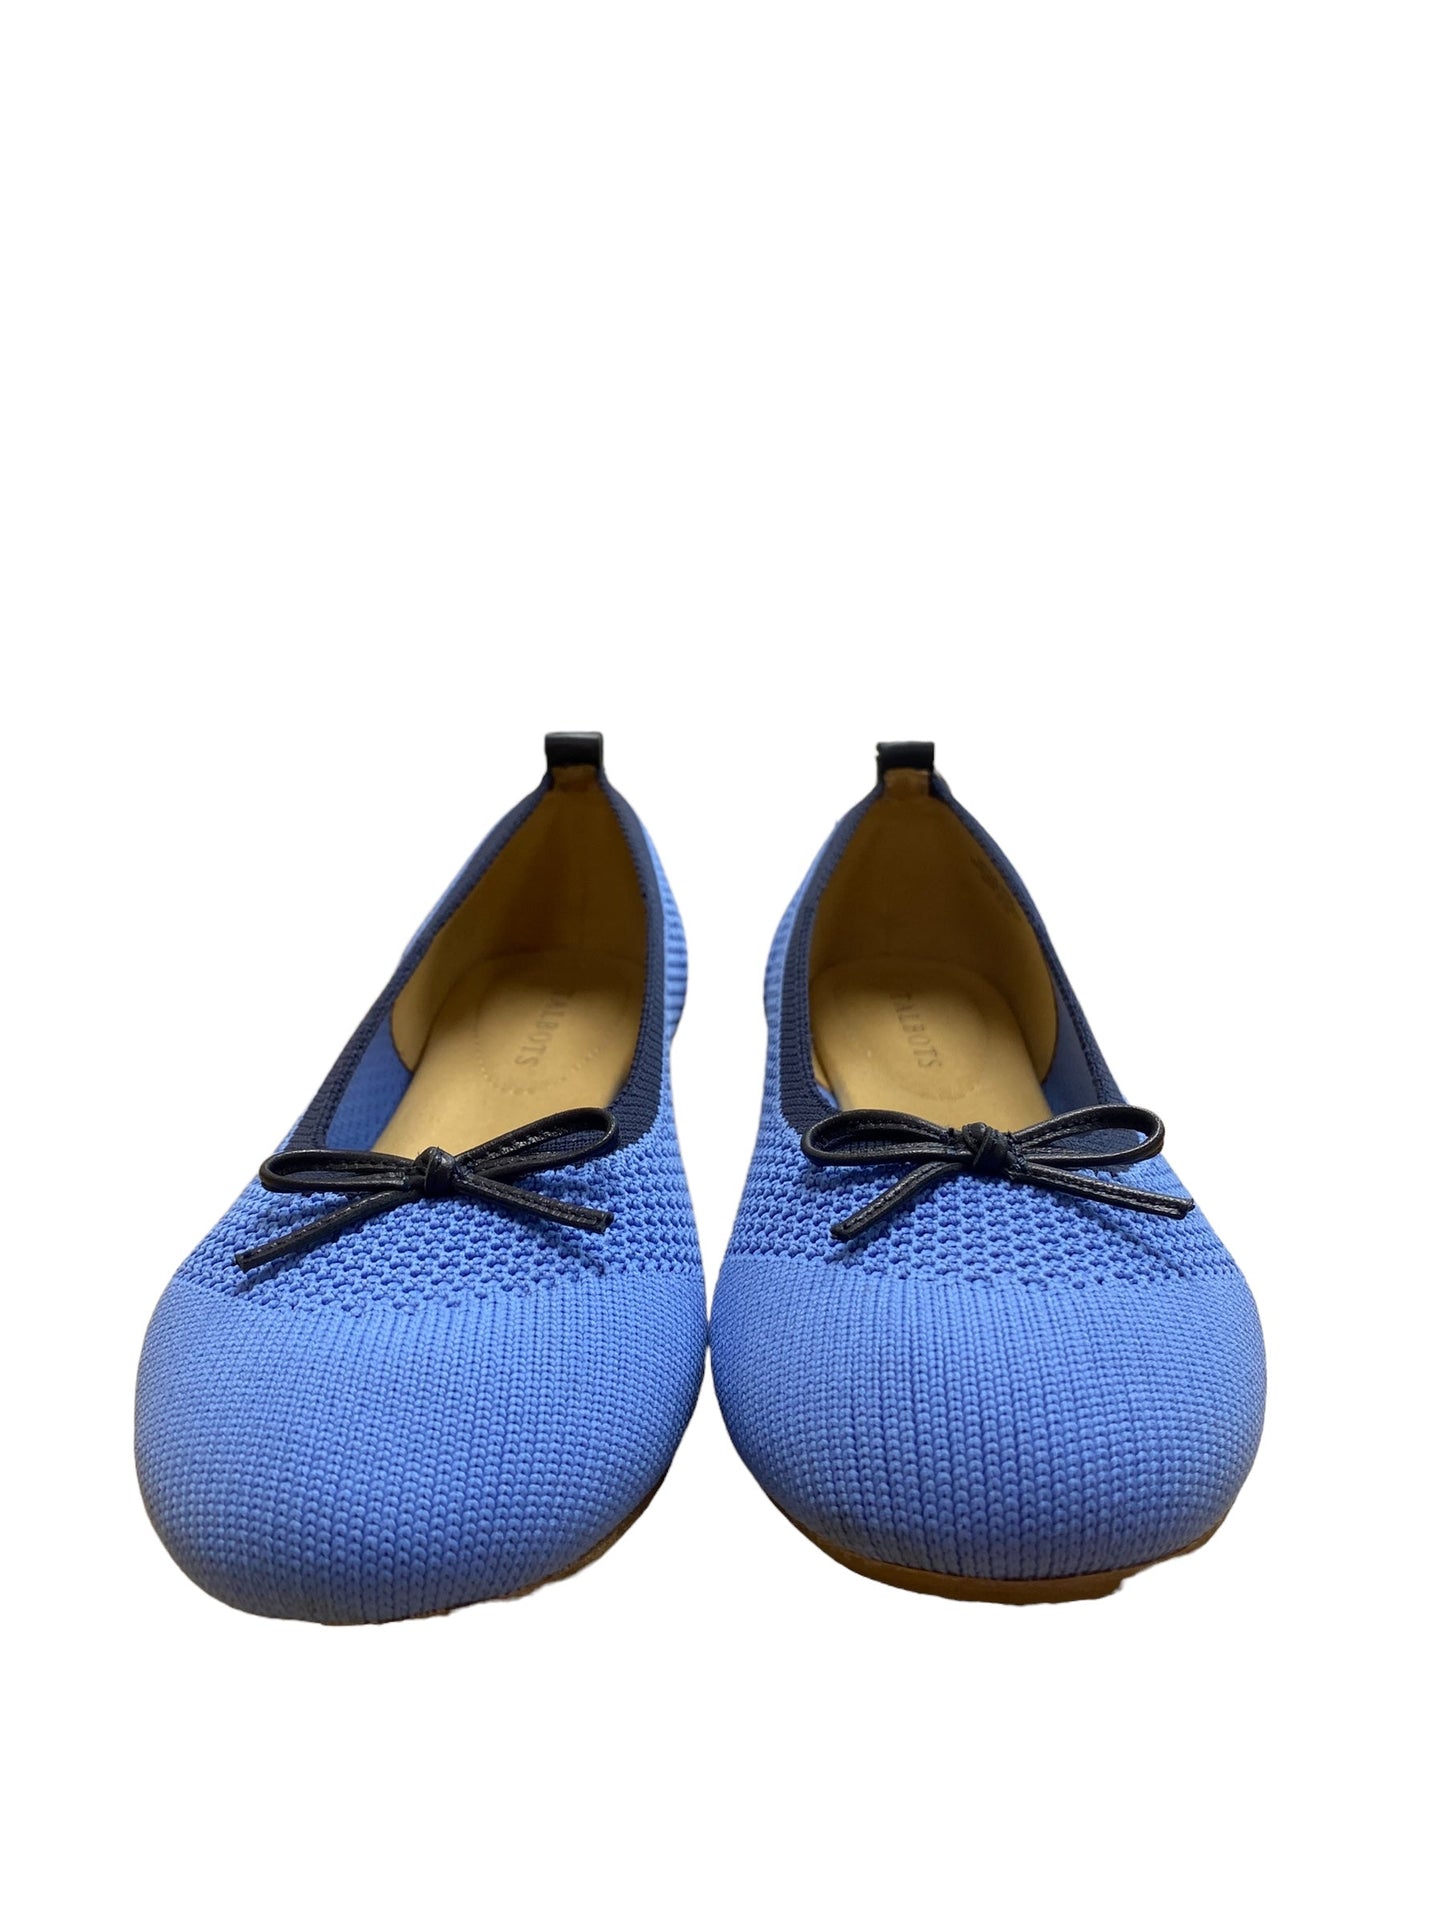 Blue Shoes Flats Talbots, Size 10.5